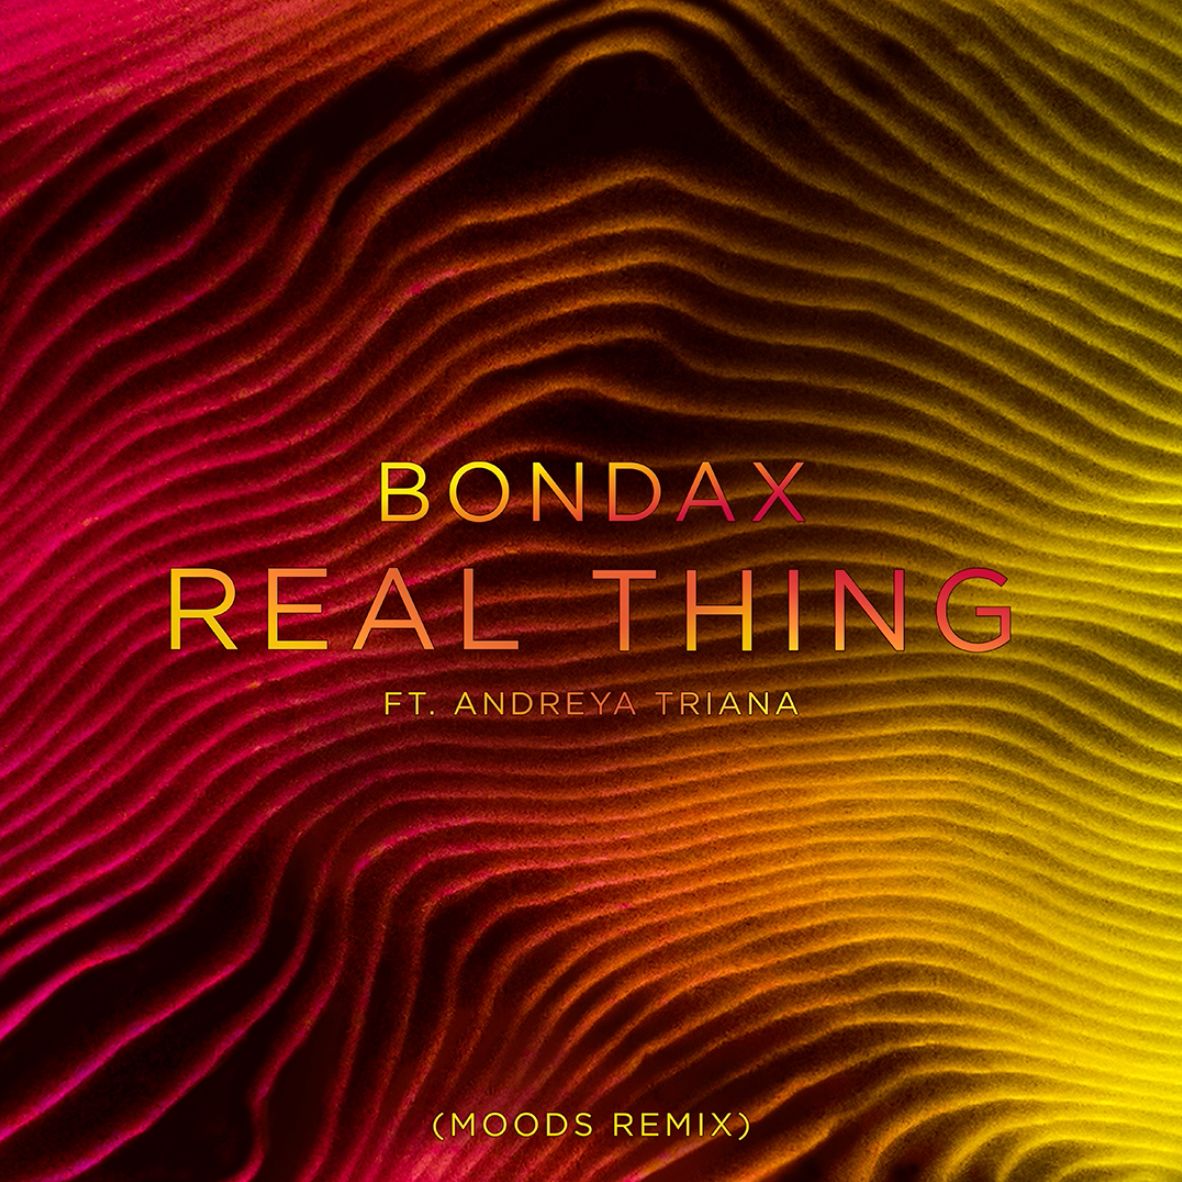 Download Bondax - Real Thing ft. Andreya Triana (Moods Remix)